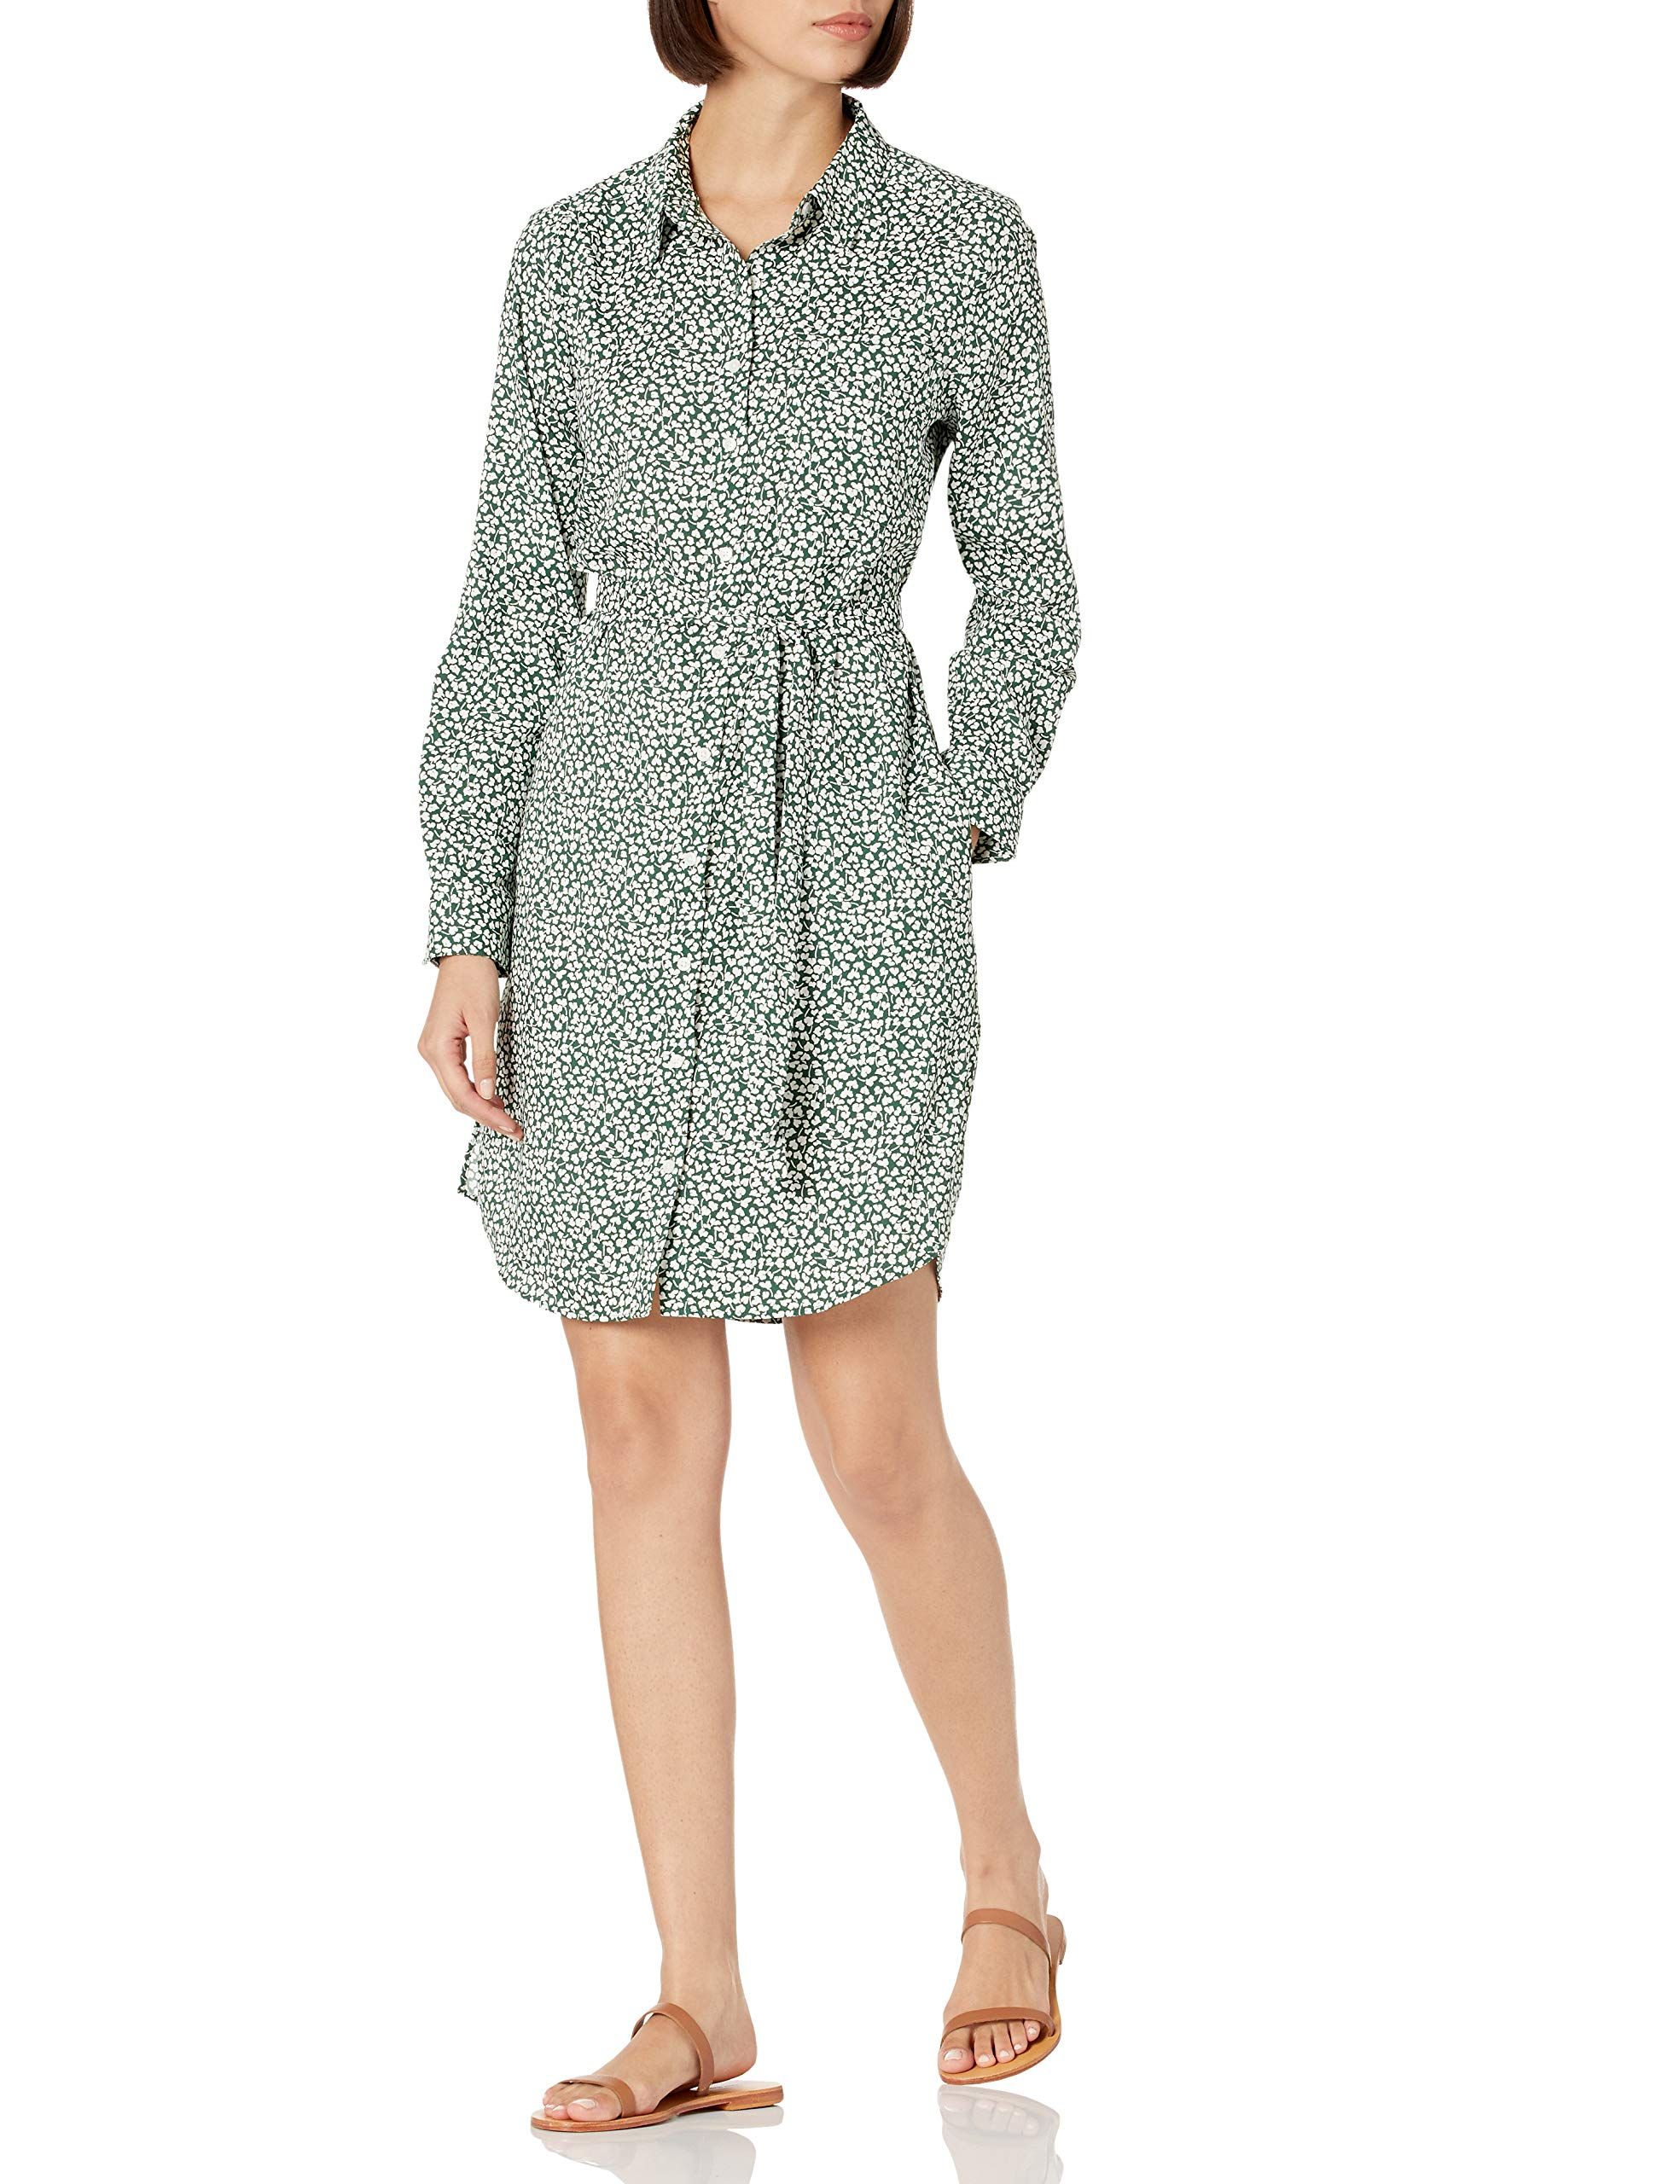 Amazon Brand - Daily Ritual Women's Georgette Long-Sleeve Button Down Shirt Dress | Amazon (US)